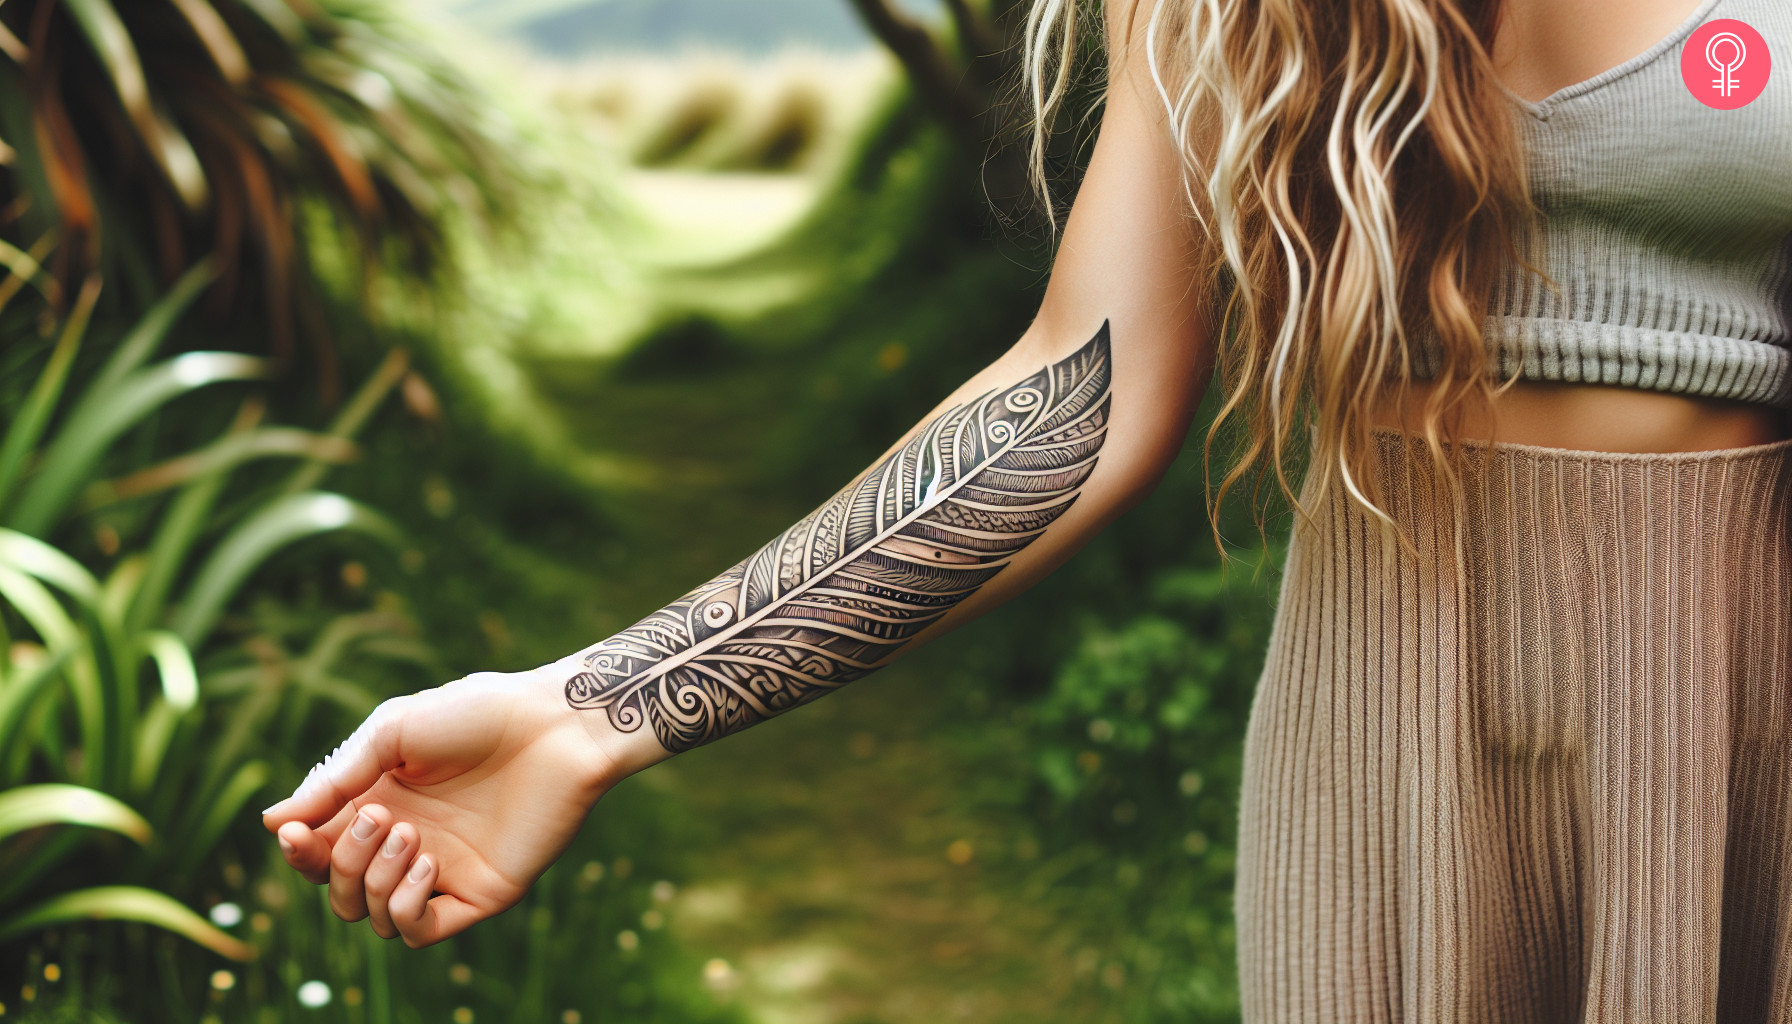 Maori leaf tattoo on the forearm of a woman